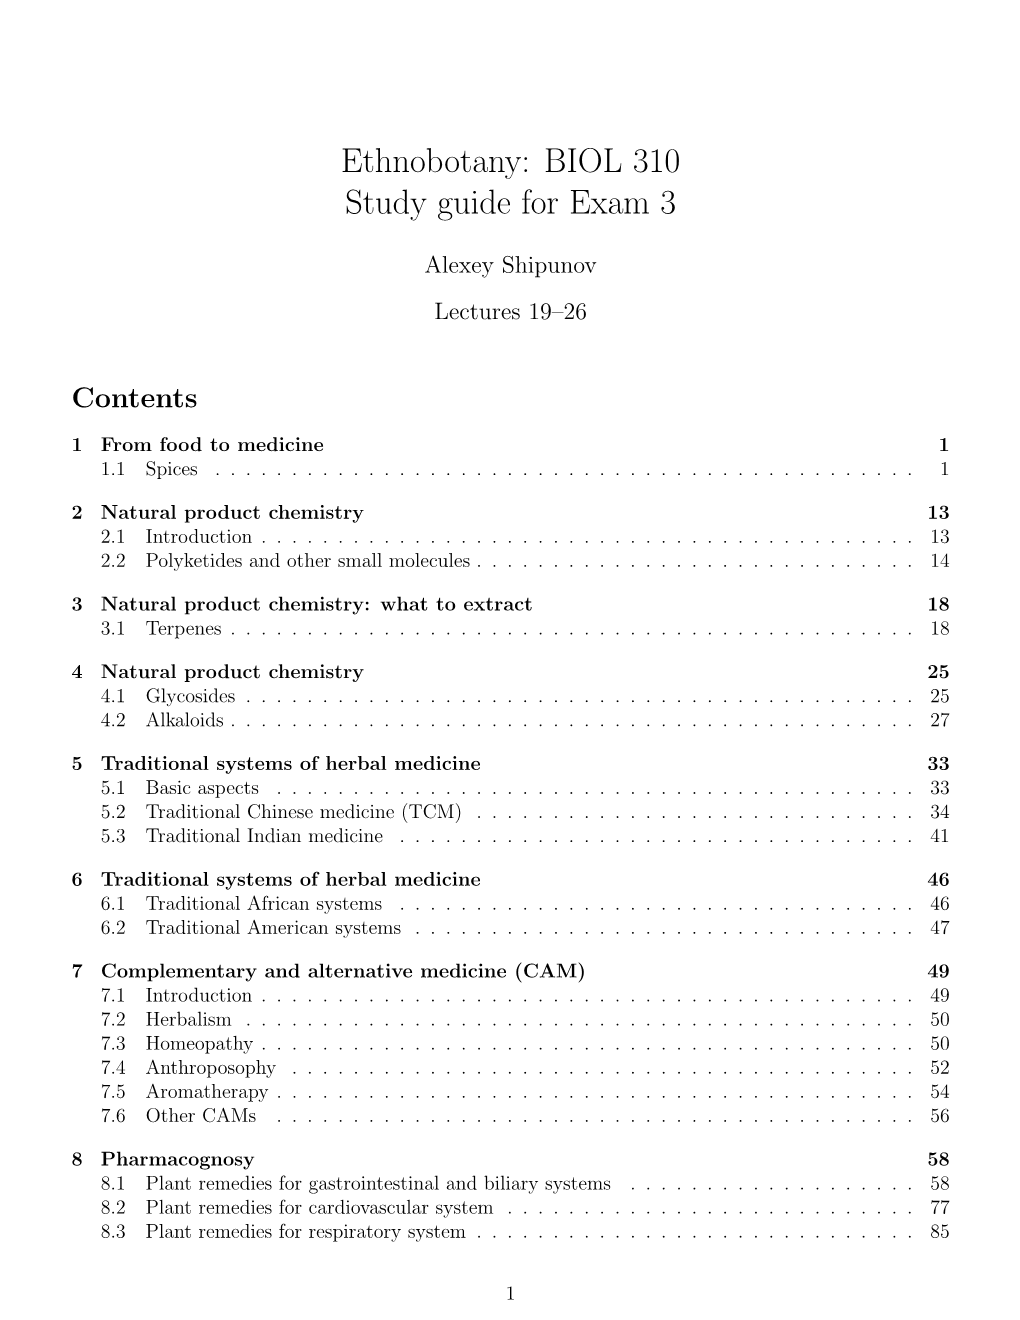 Ethnobotany: BIOL 310 Study Guide for Exam 3